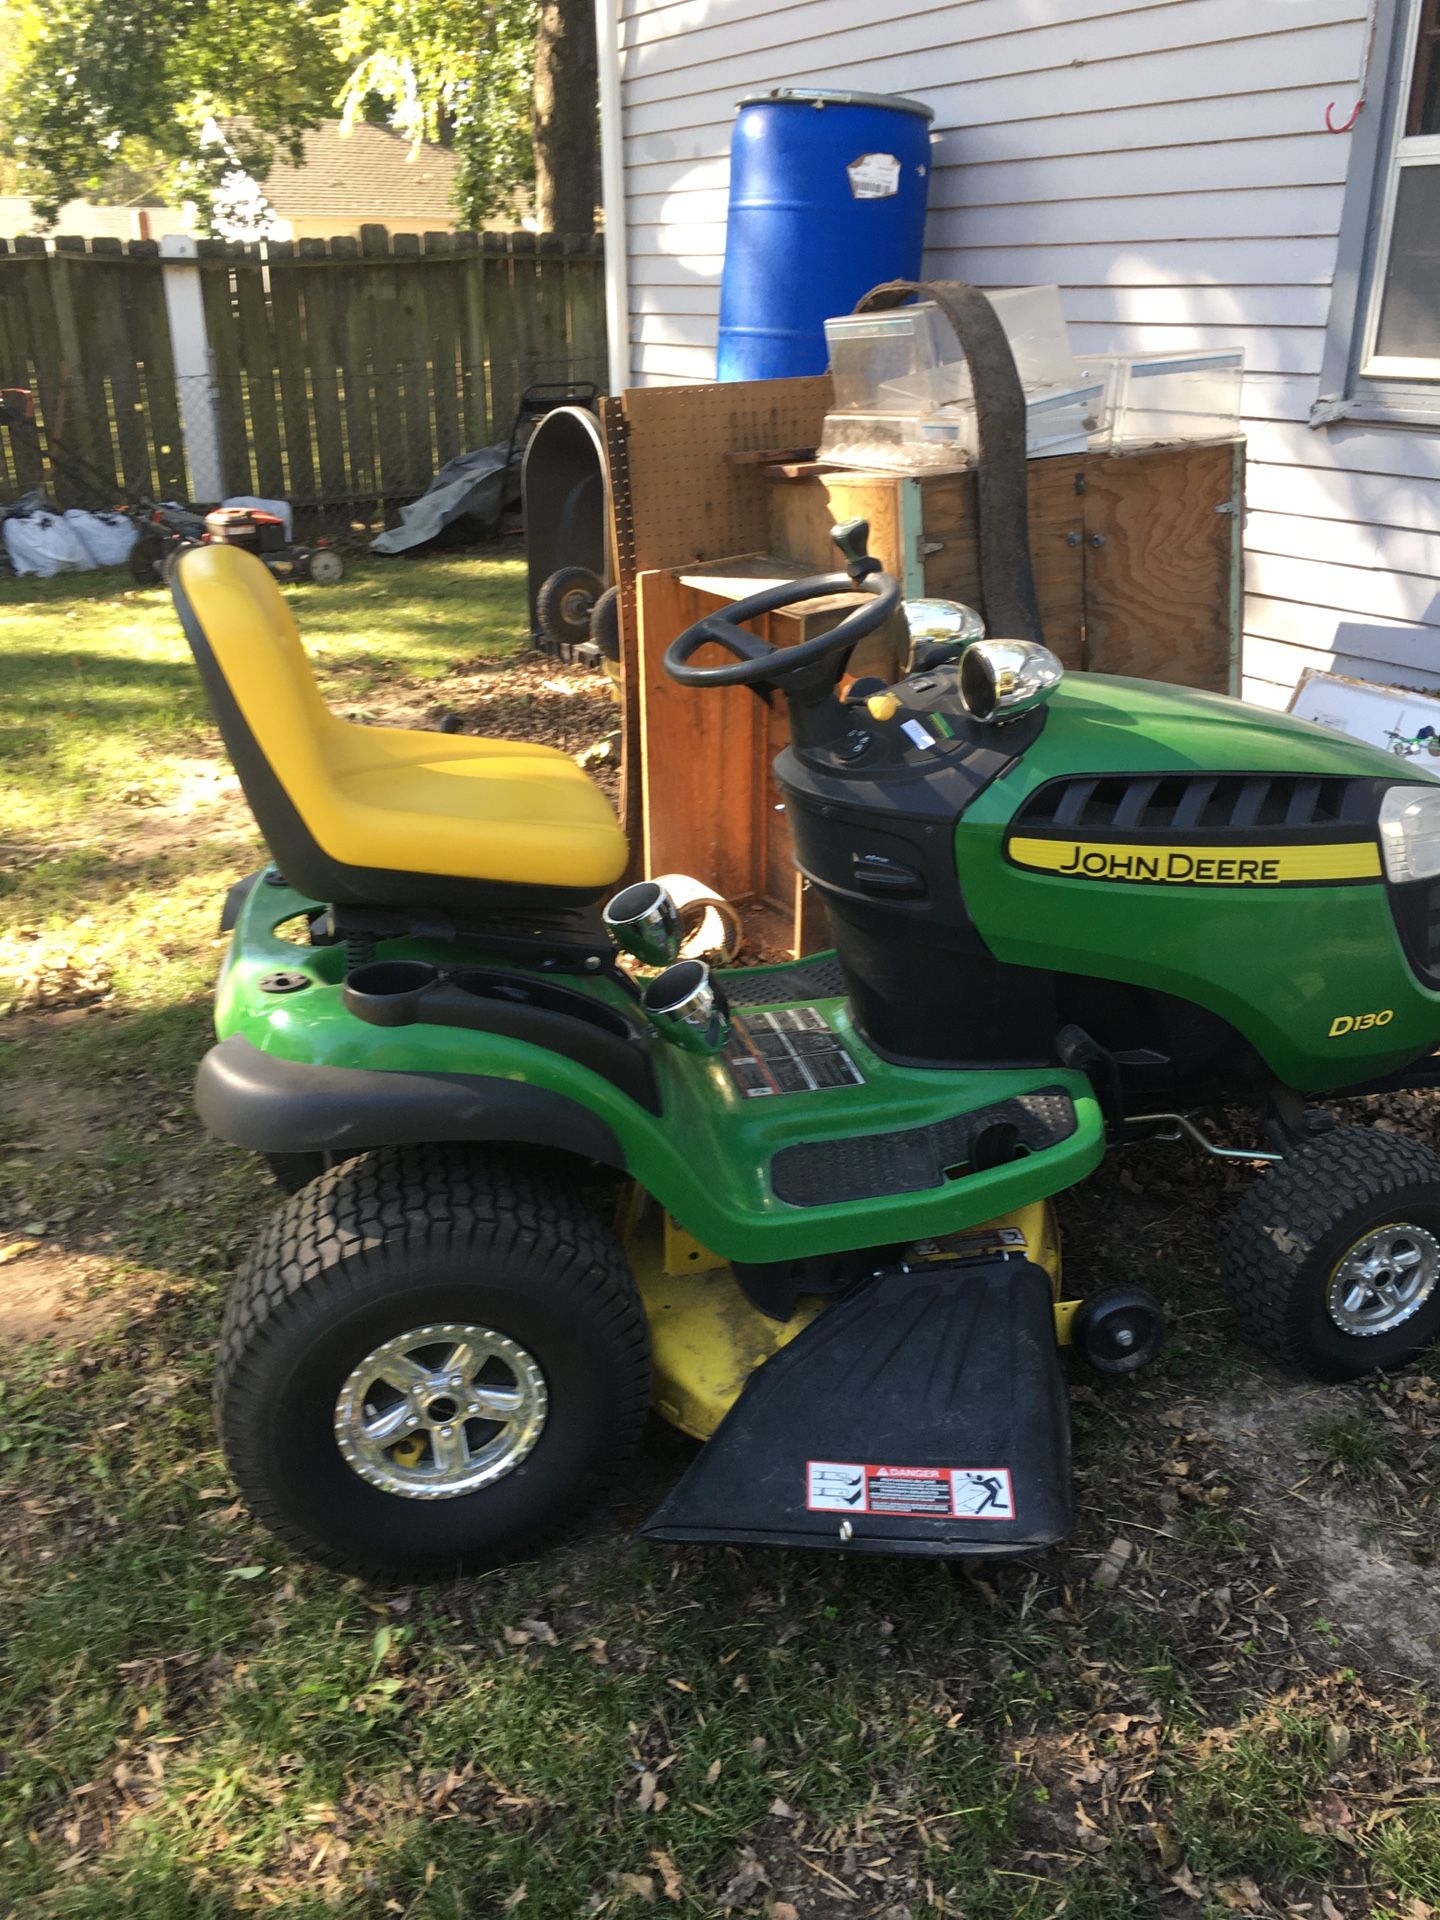 John Deere D130 lawn tractor 42” cut 54 hrs